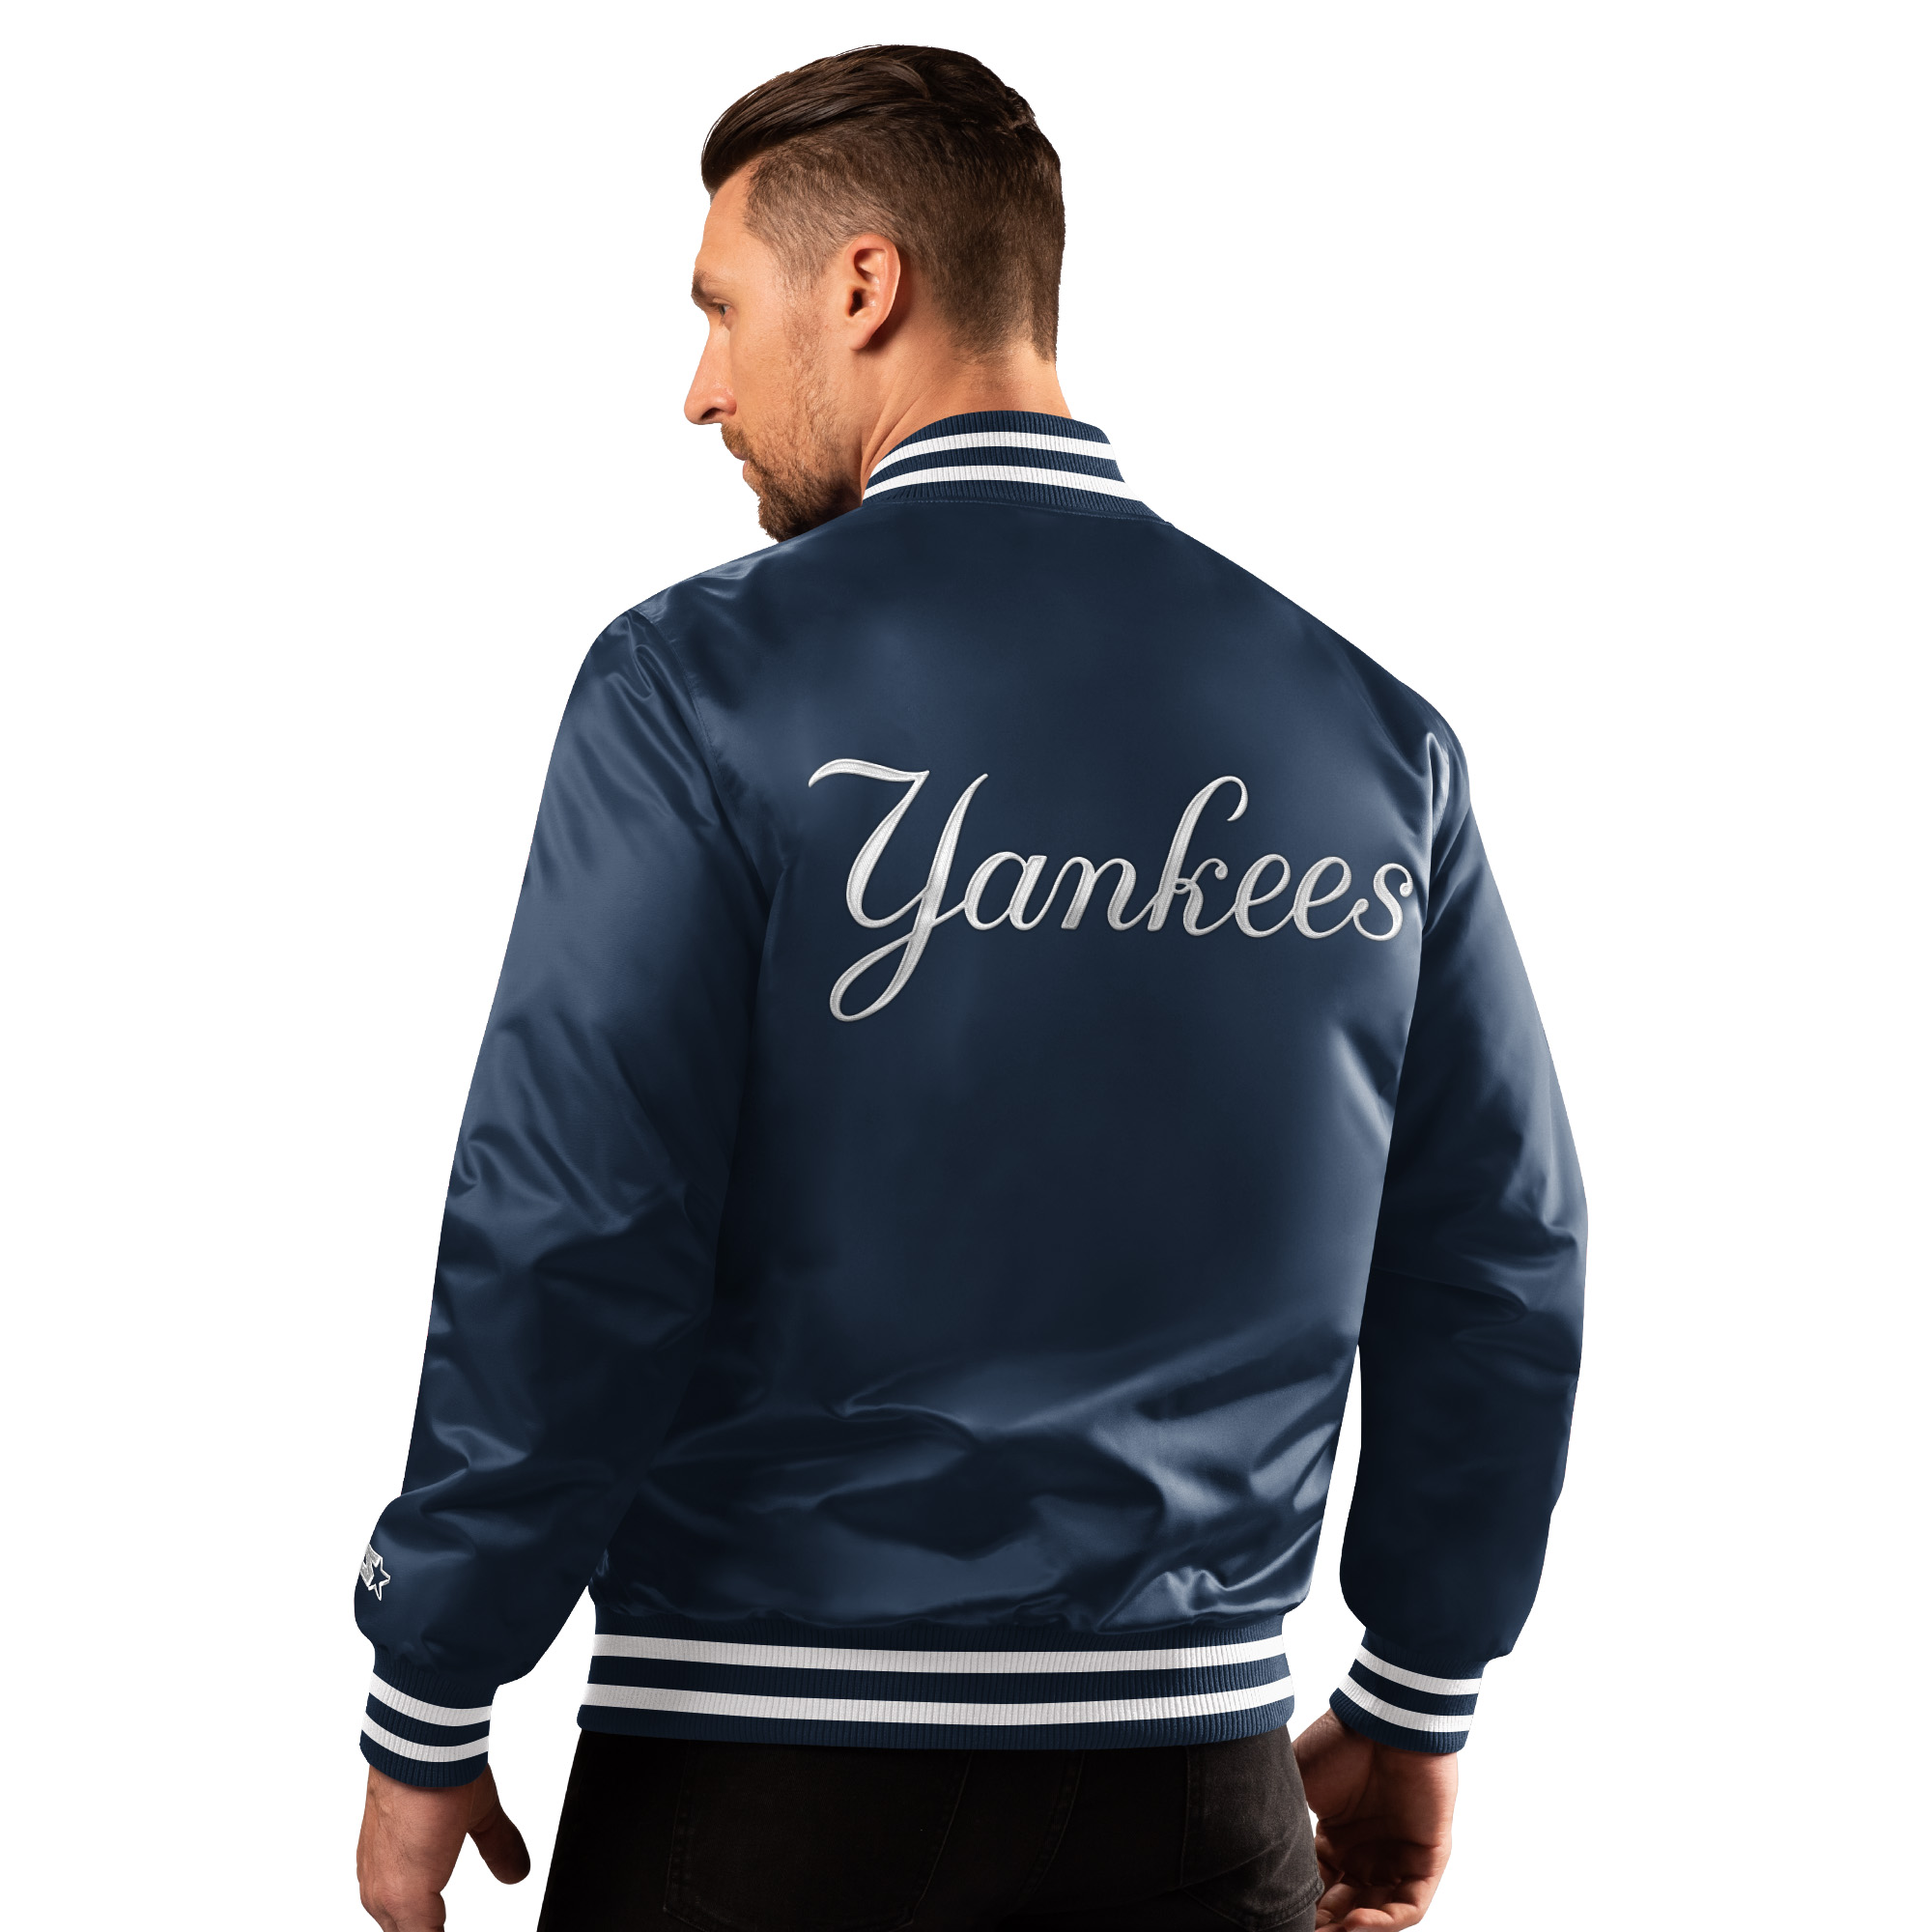 Mitchell & Ness Men New York Yankees 99 Authentic Satin Jacket